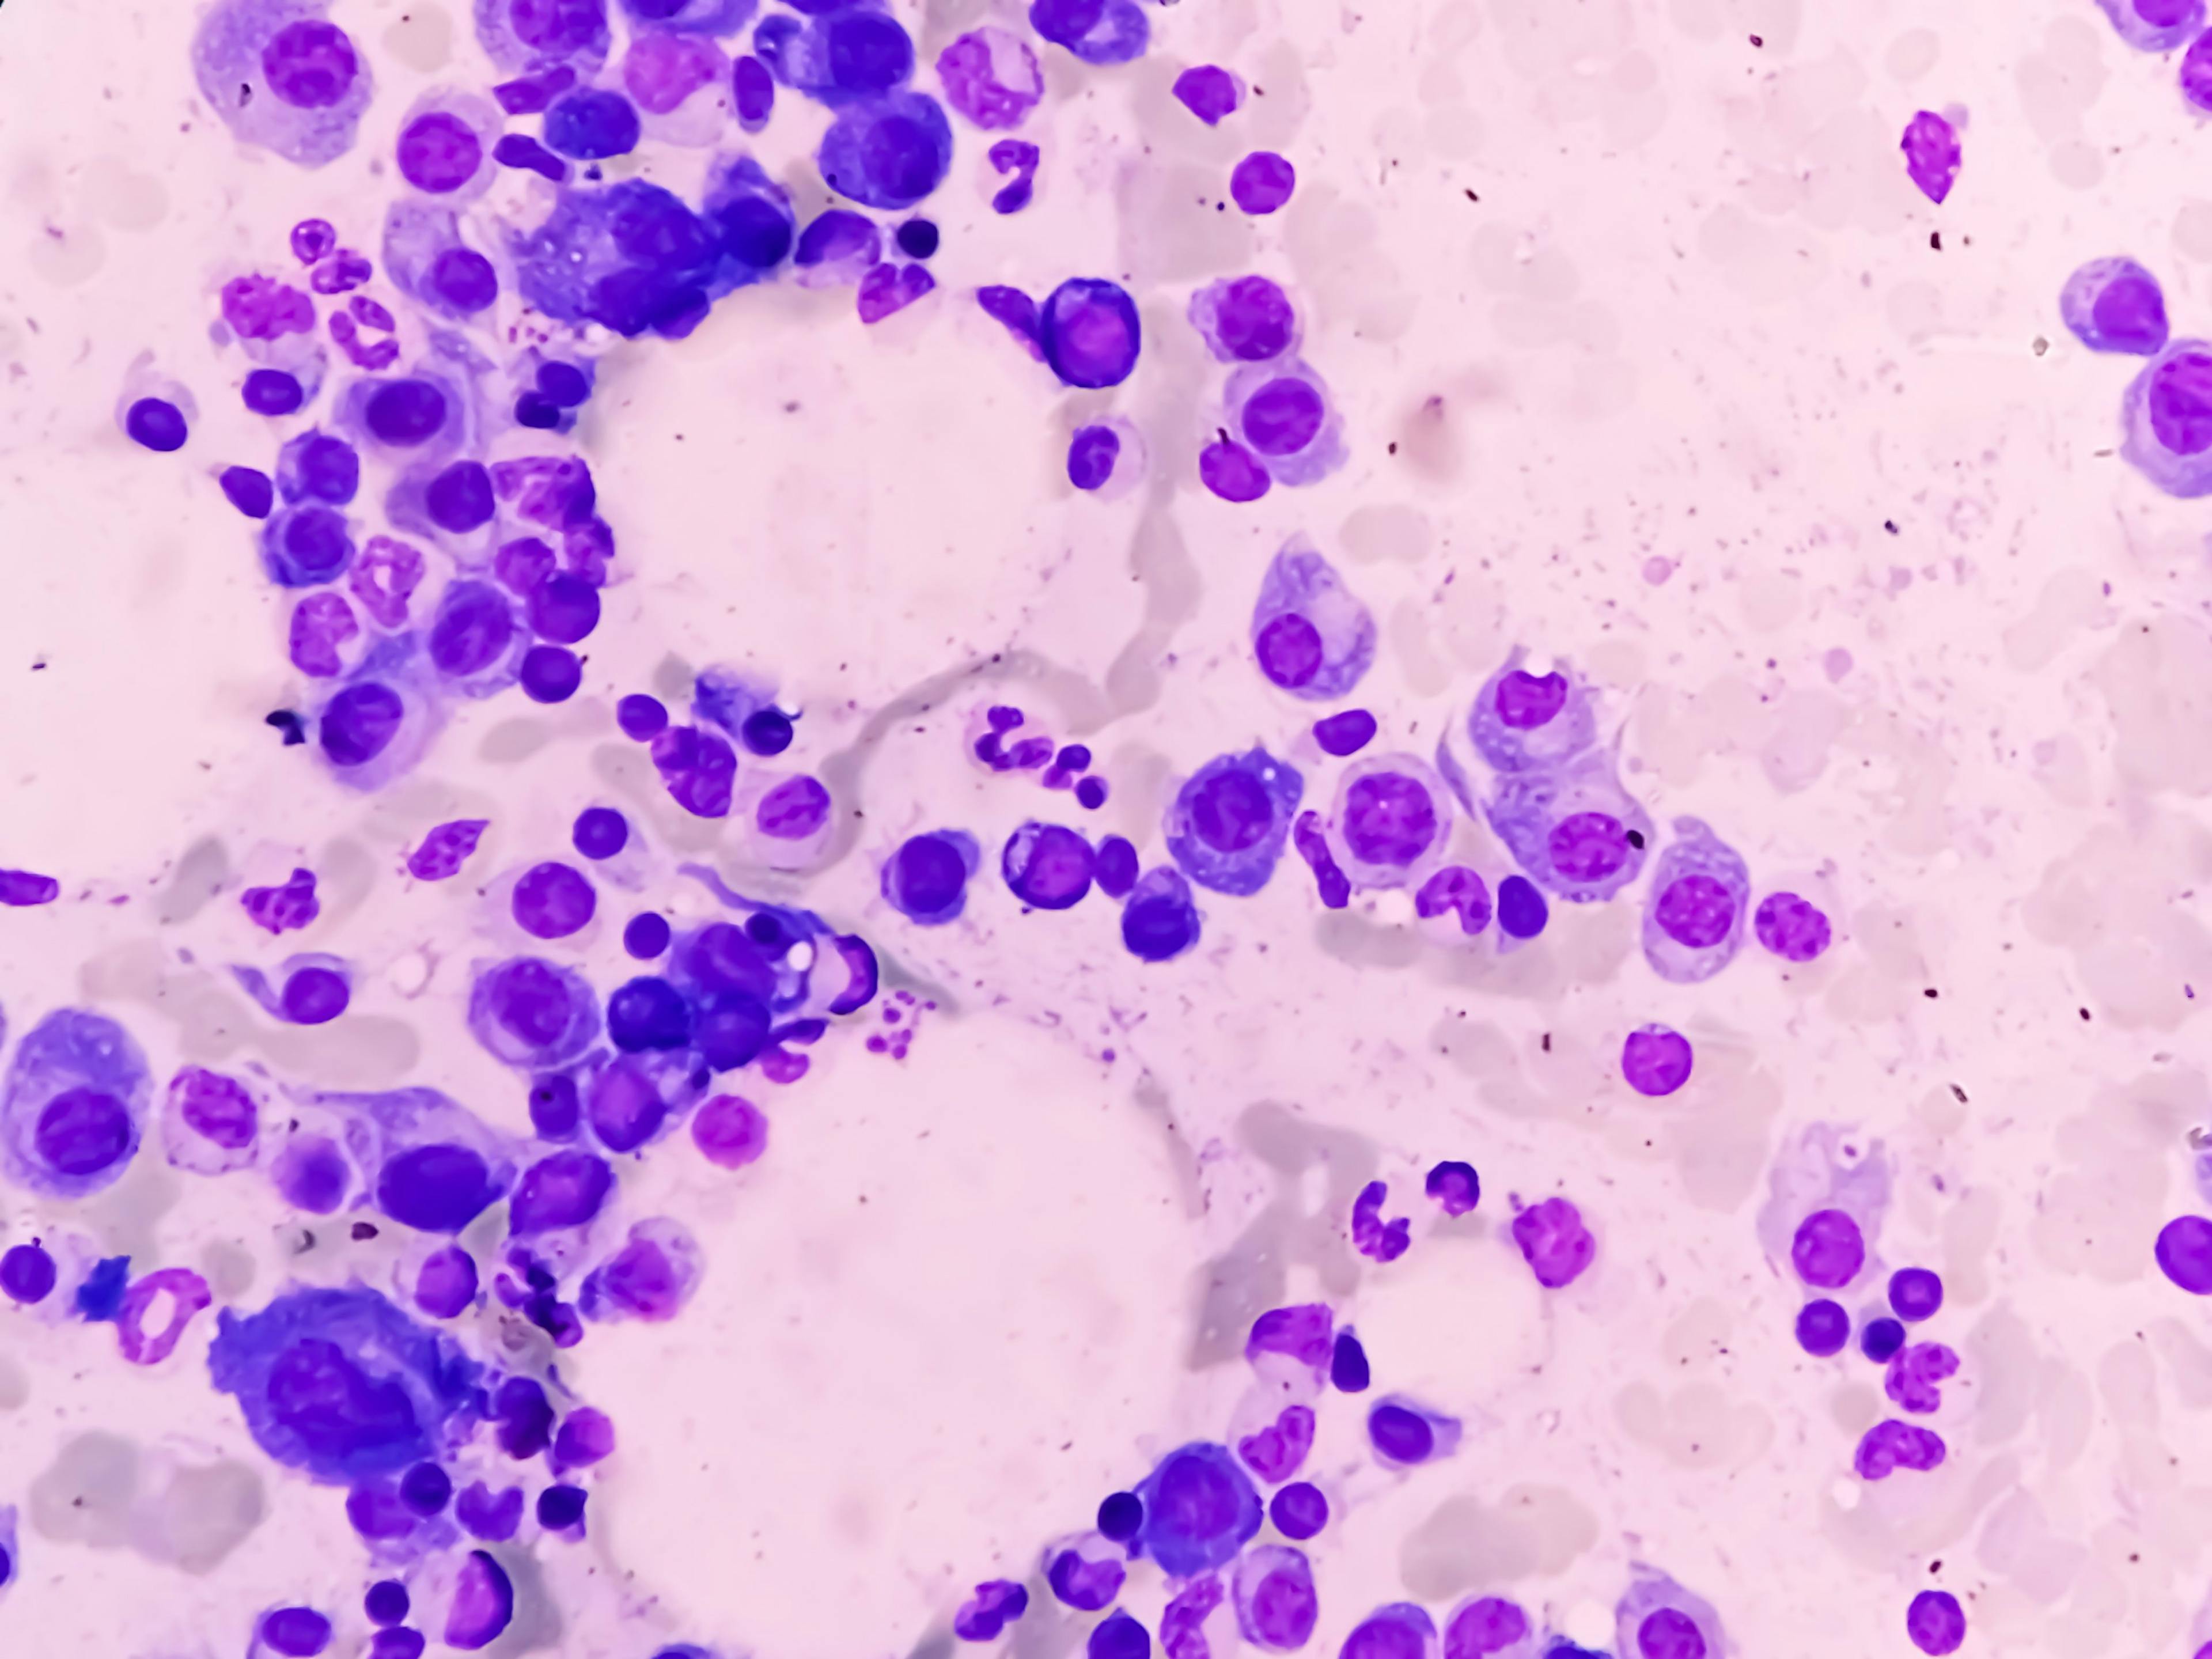 Microscopic view of bone marrow, multiple myeloma